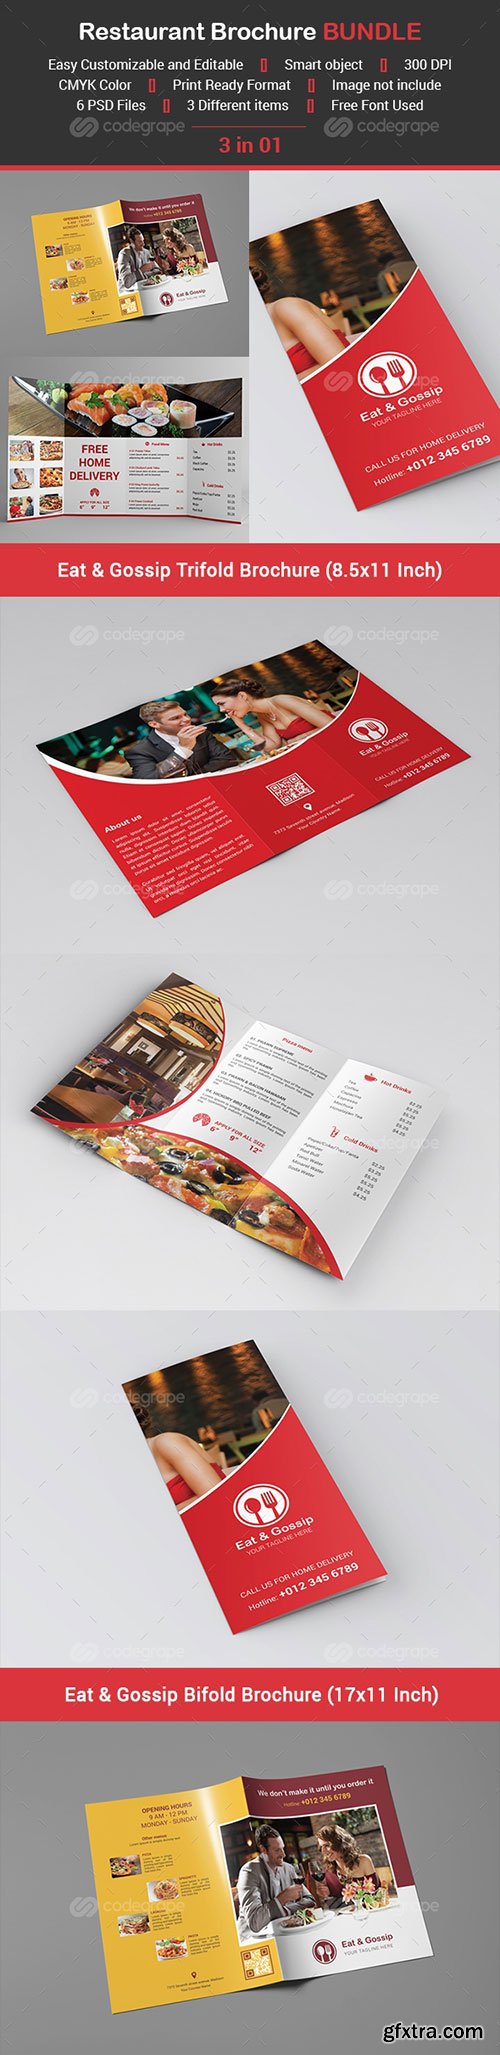 Restaurant Brochure BUNDLE 10909